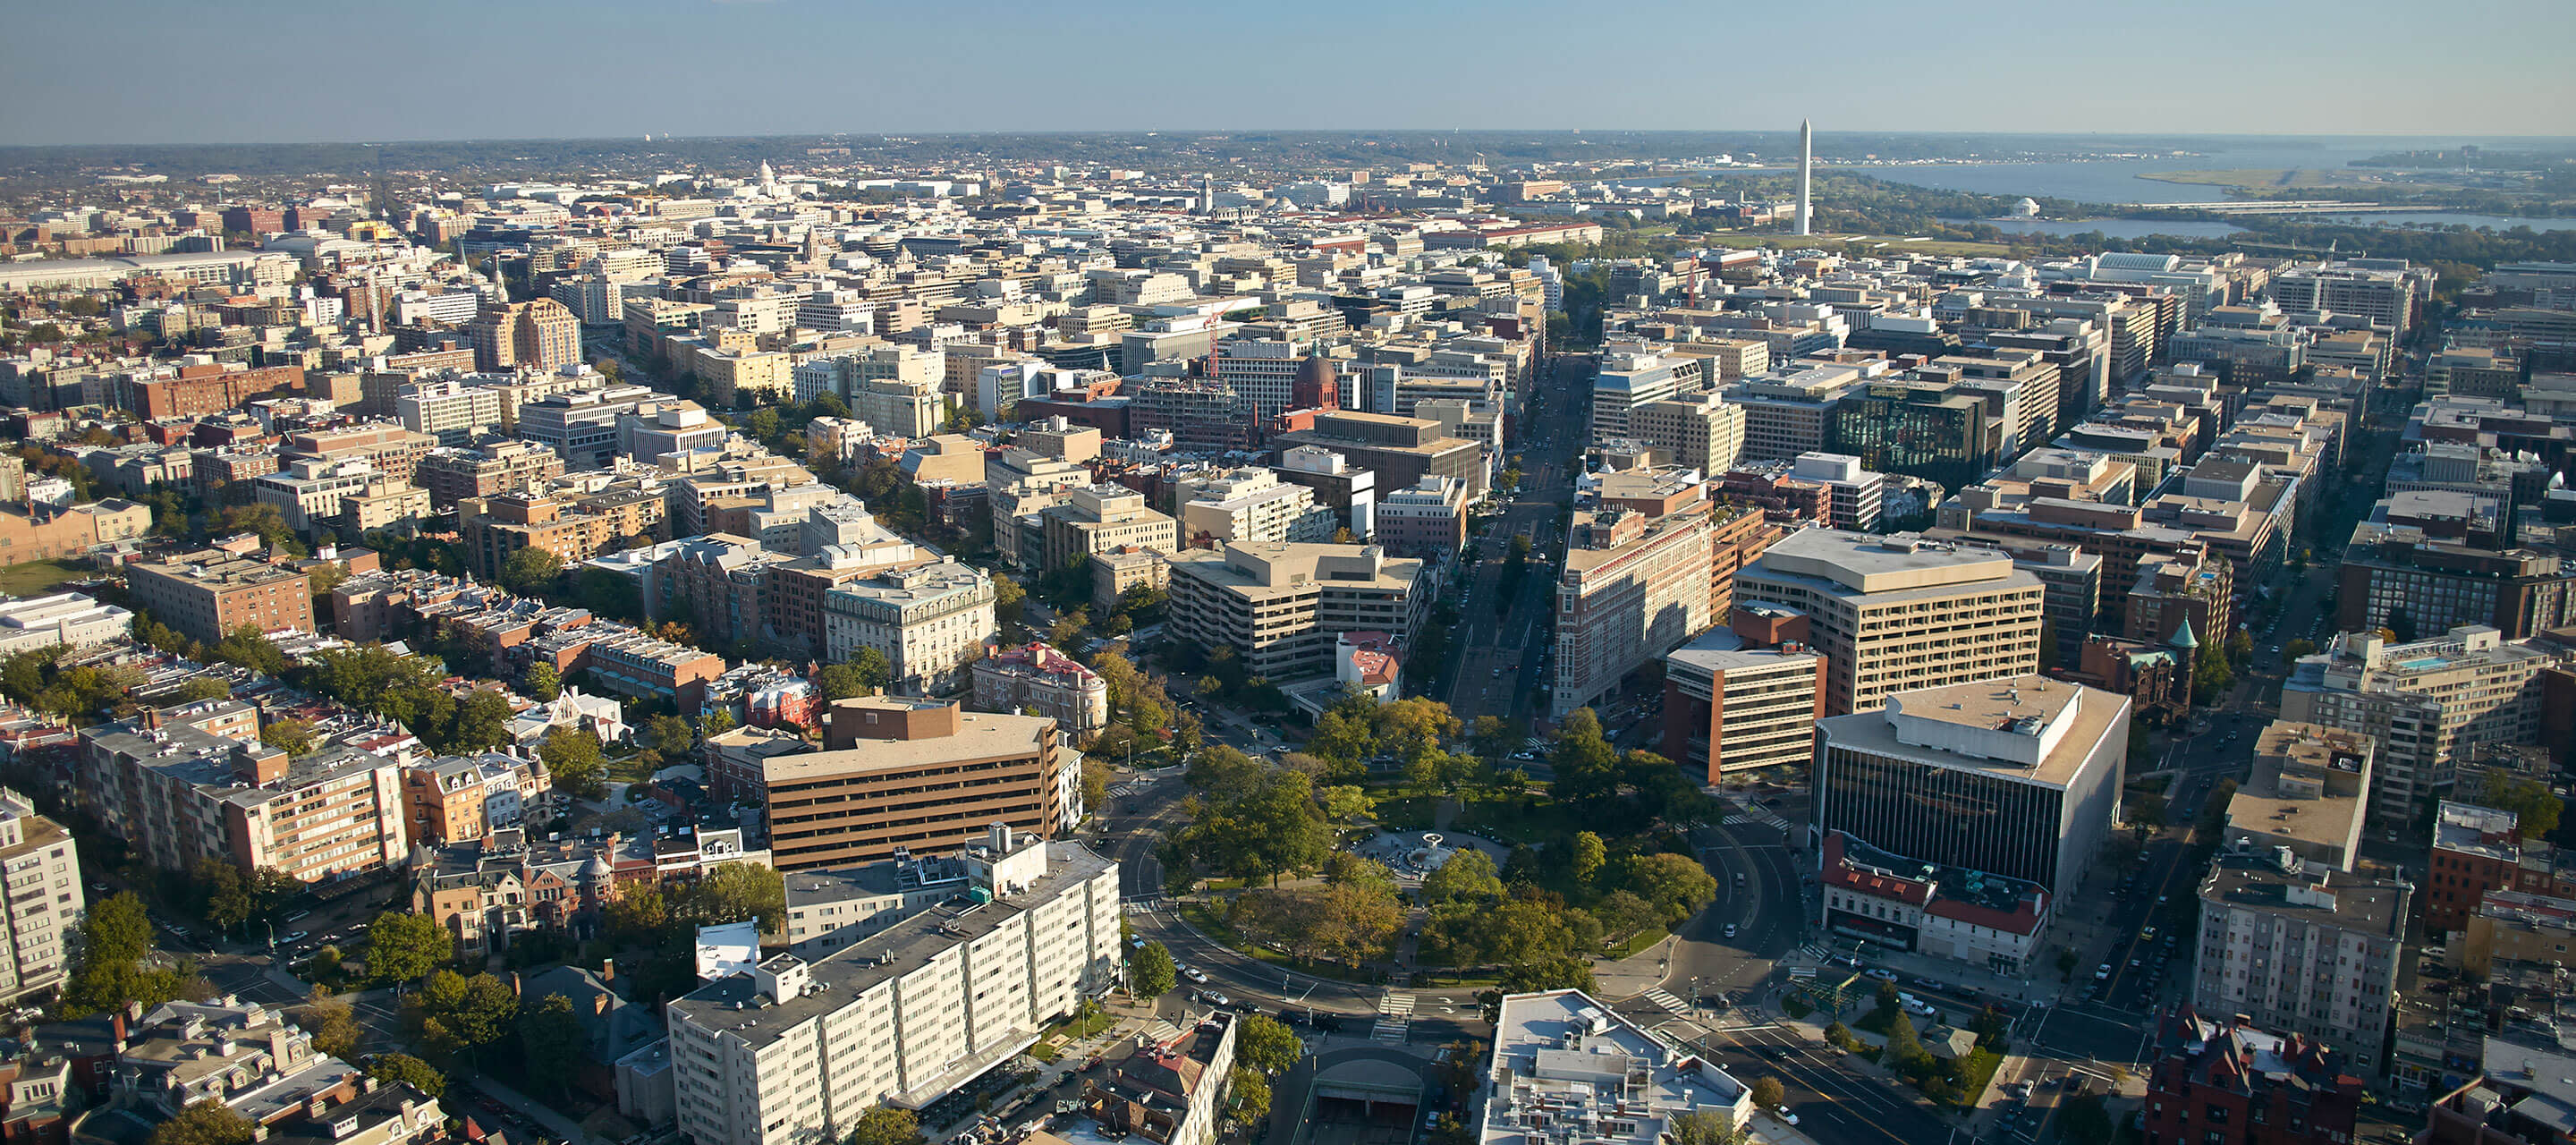 aerial view of Washington DC